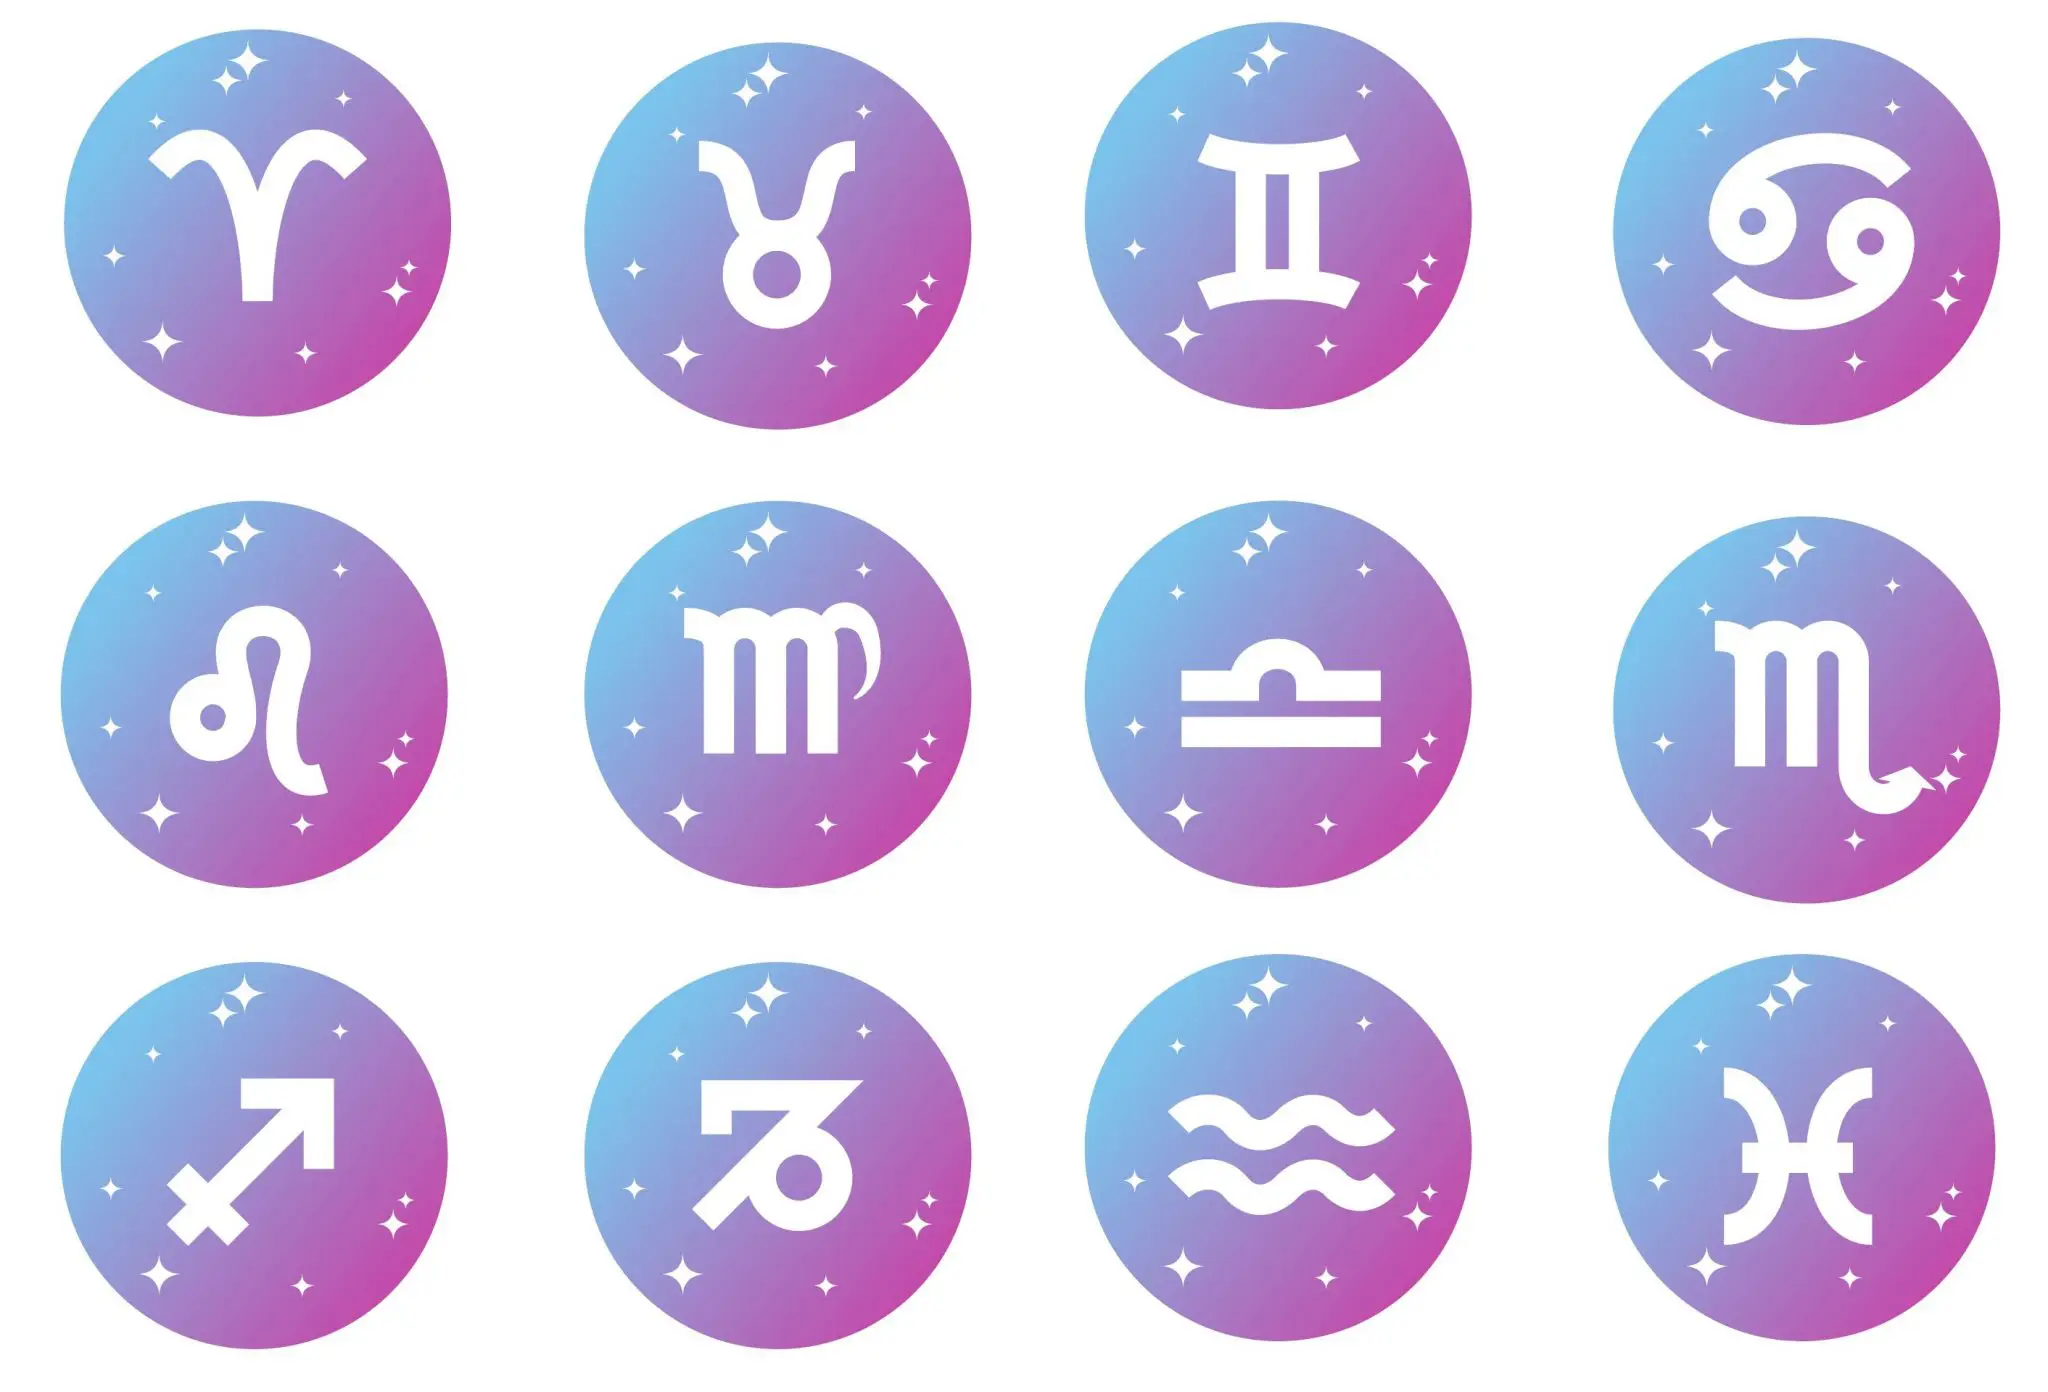 non emoji astrology symbols